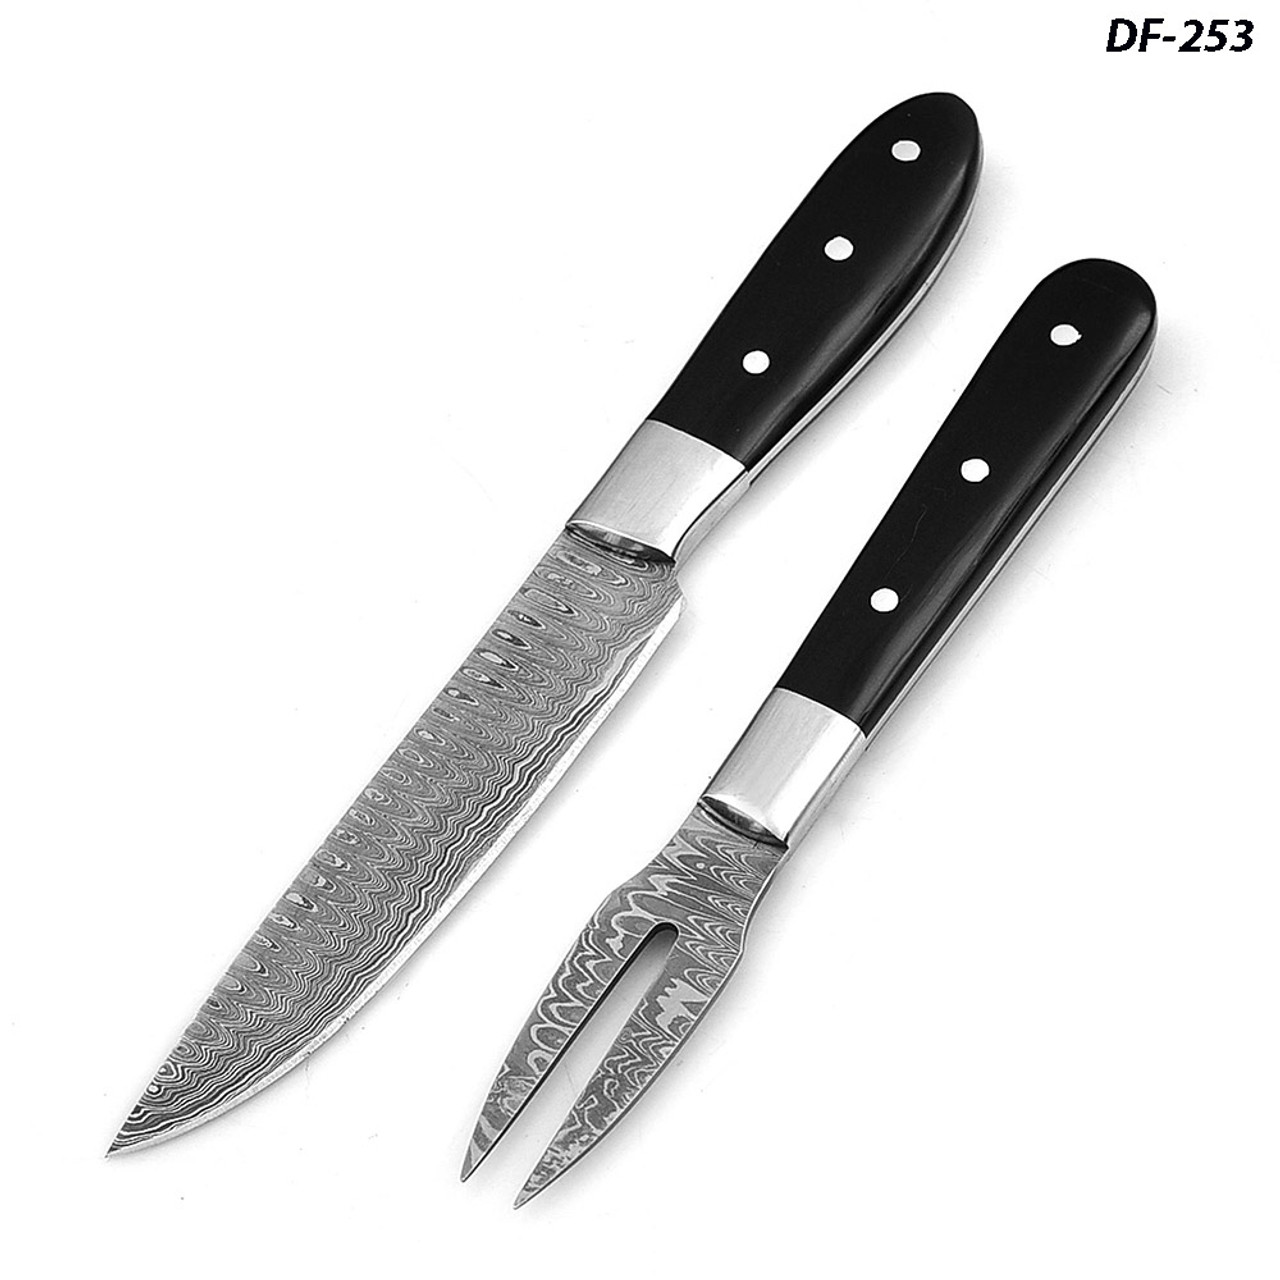 ARCOS Forged Kitchen Knife Set 3 Pieces (Paring Knife + Kitchen Knife +  Chef's Knife). Stainless Steel Forged Nitrum. Polypropylene POM Handle.  Series